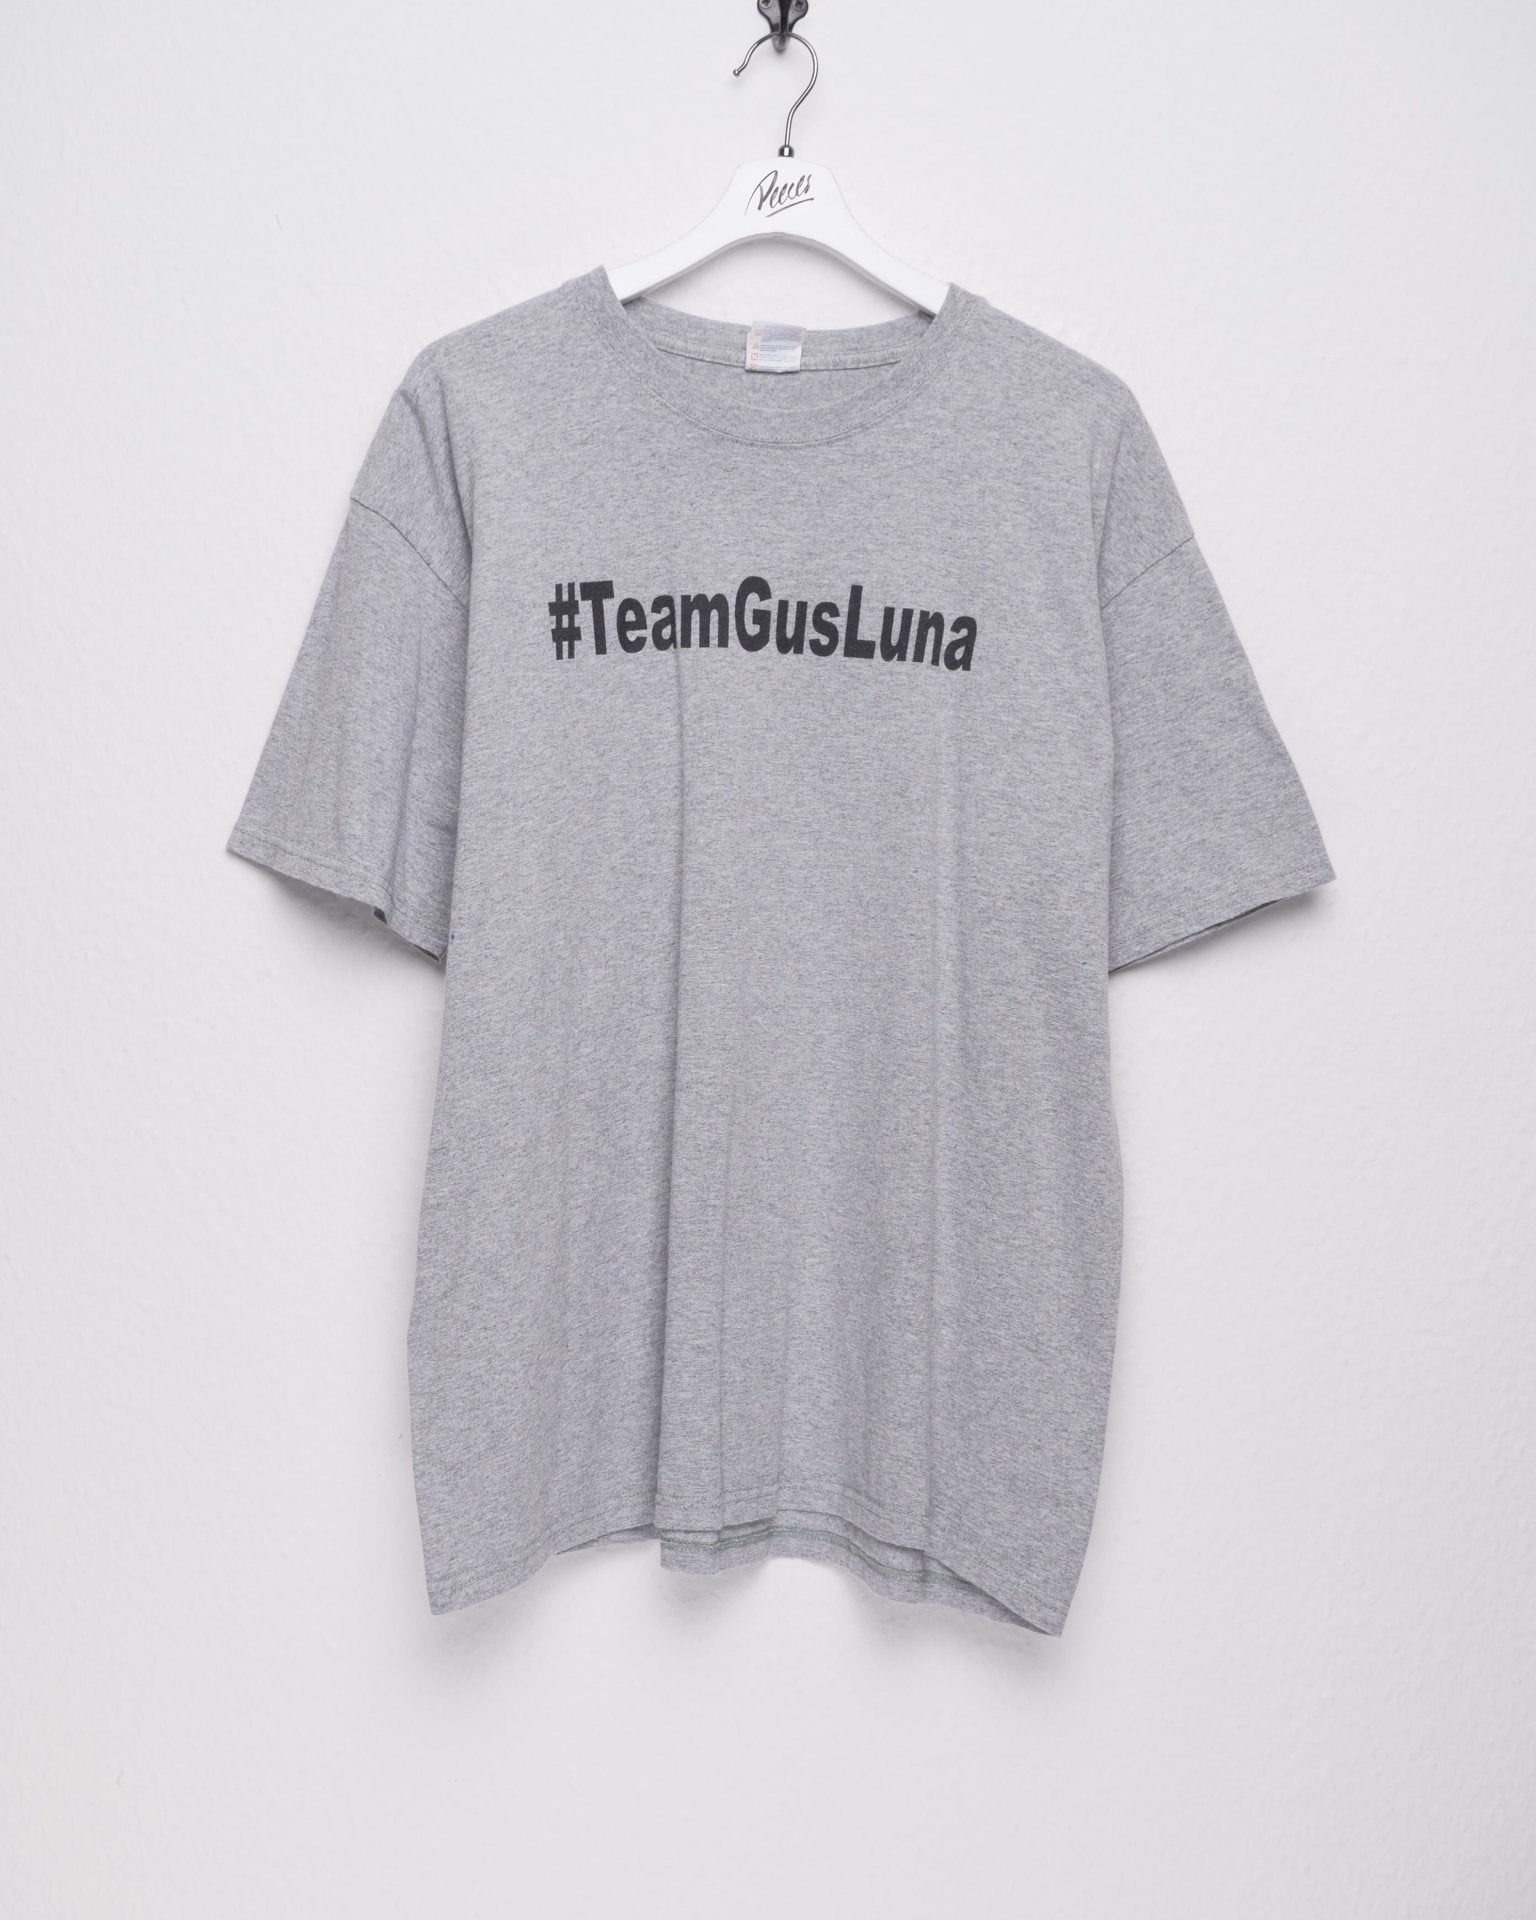 printed '#TeamGusLuna' Spellout grey Shirt - Peeces